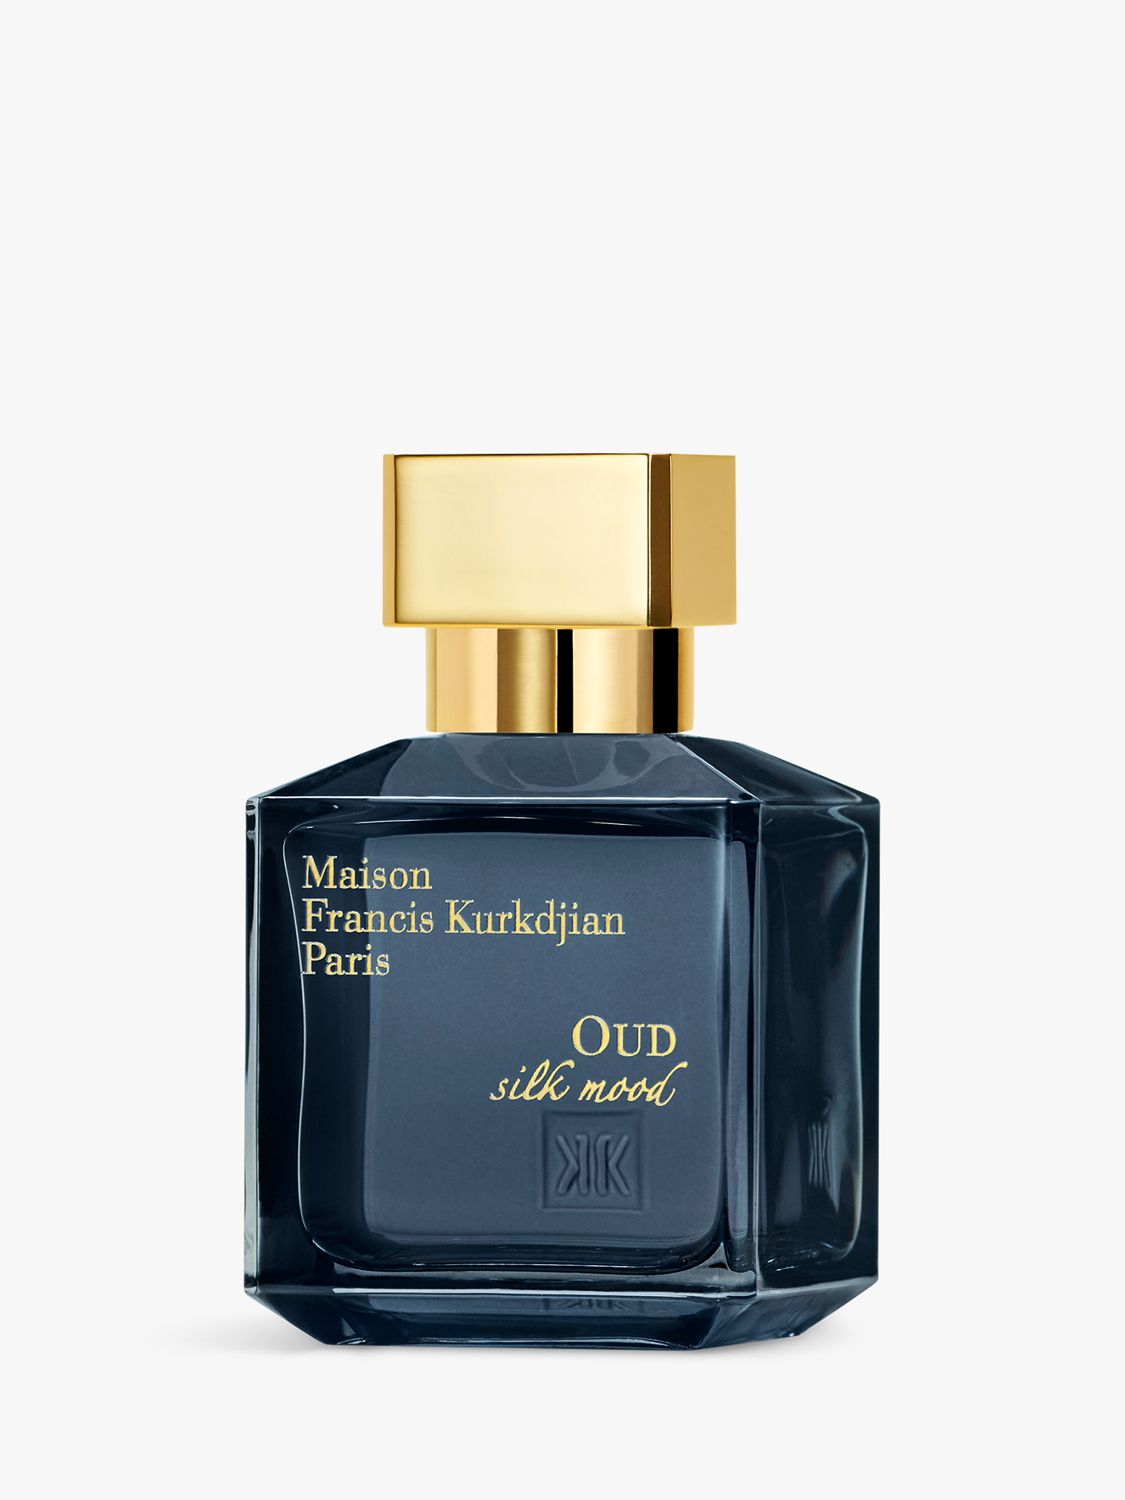 Maison Francis Kurkdjian Oud Silk Mood Eau de Parfum, 70ml 2